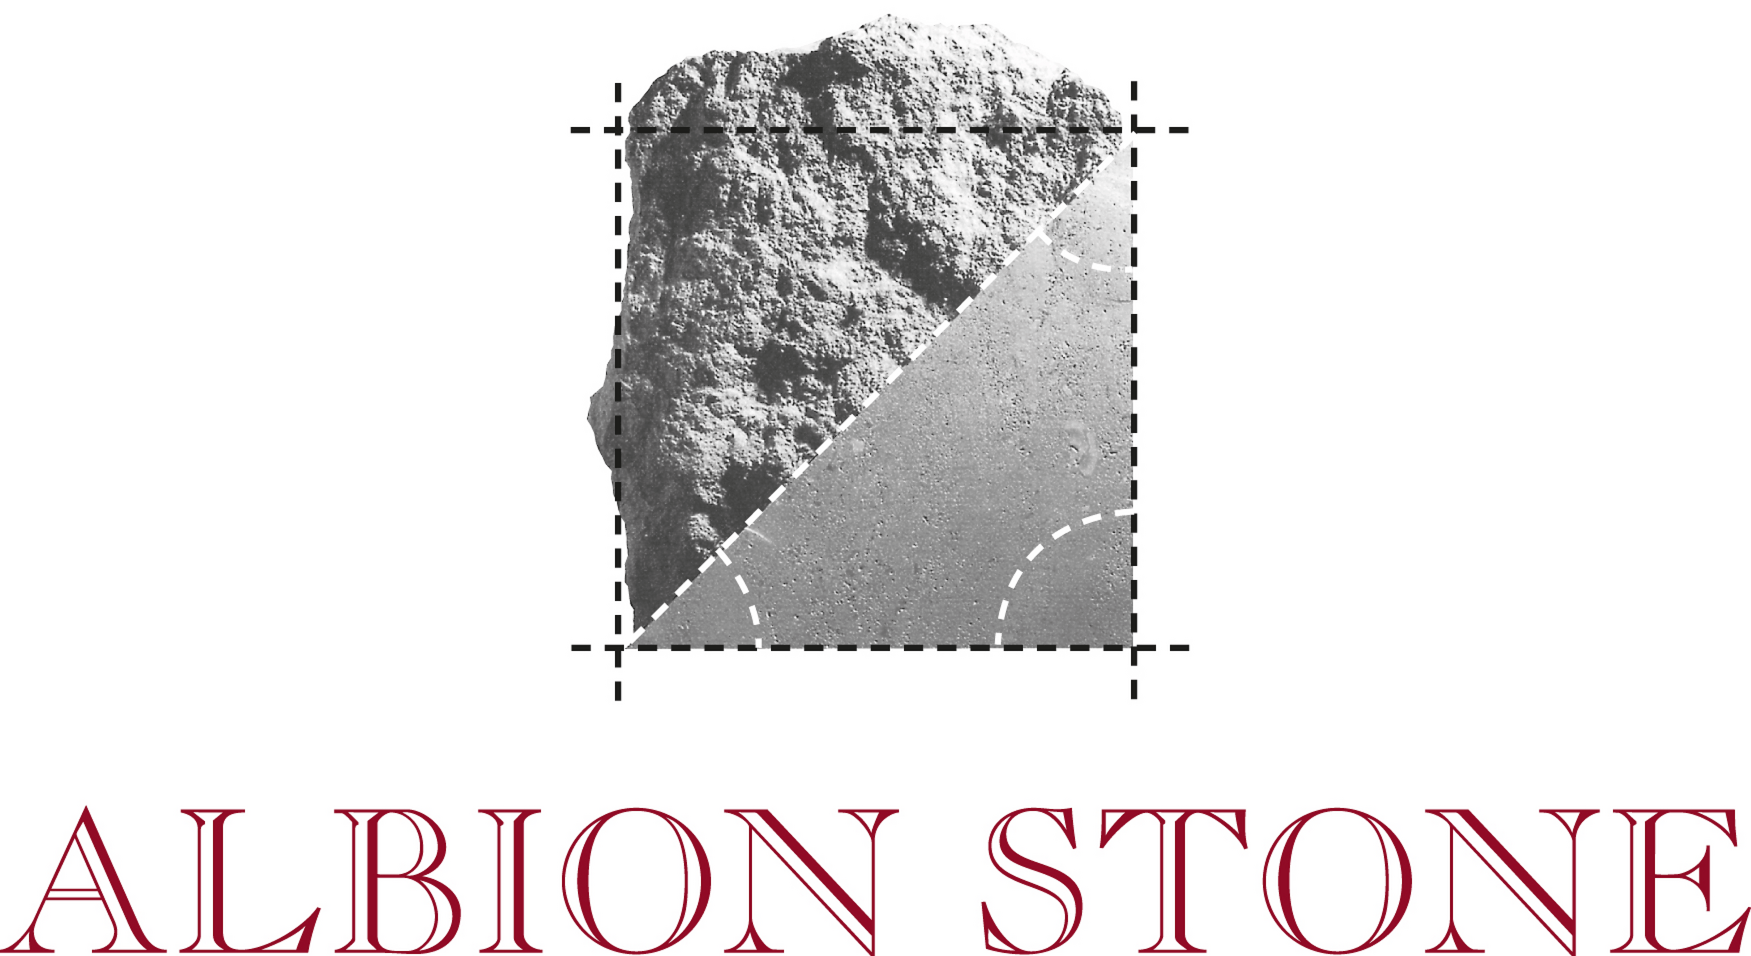 Albion Stone plc